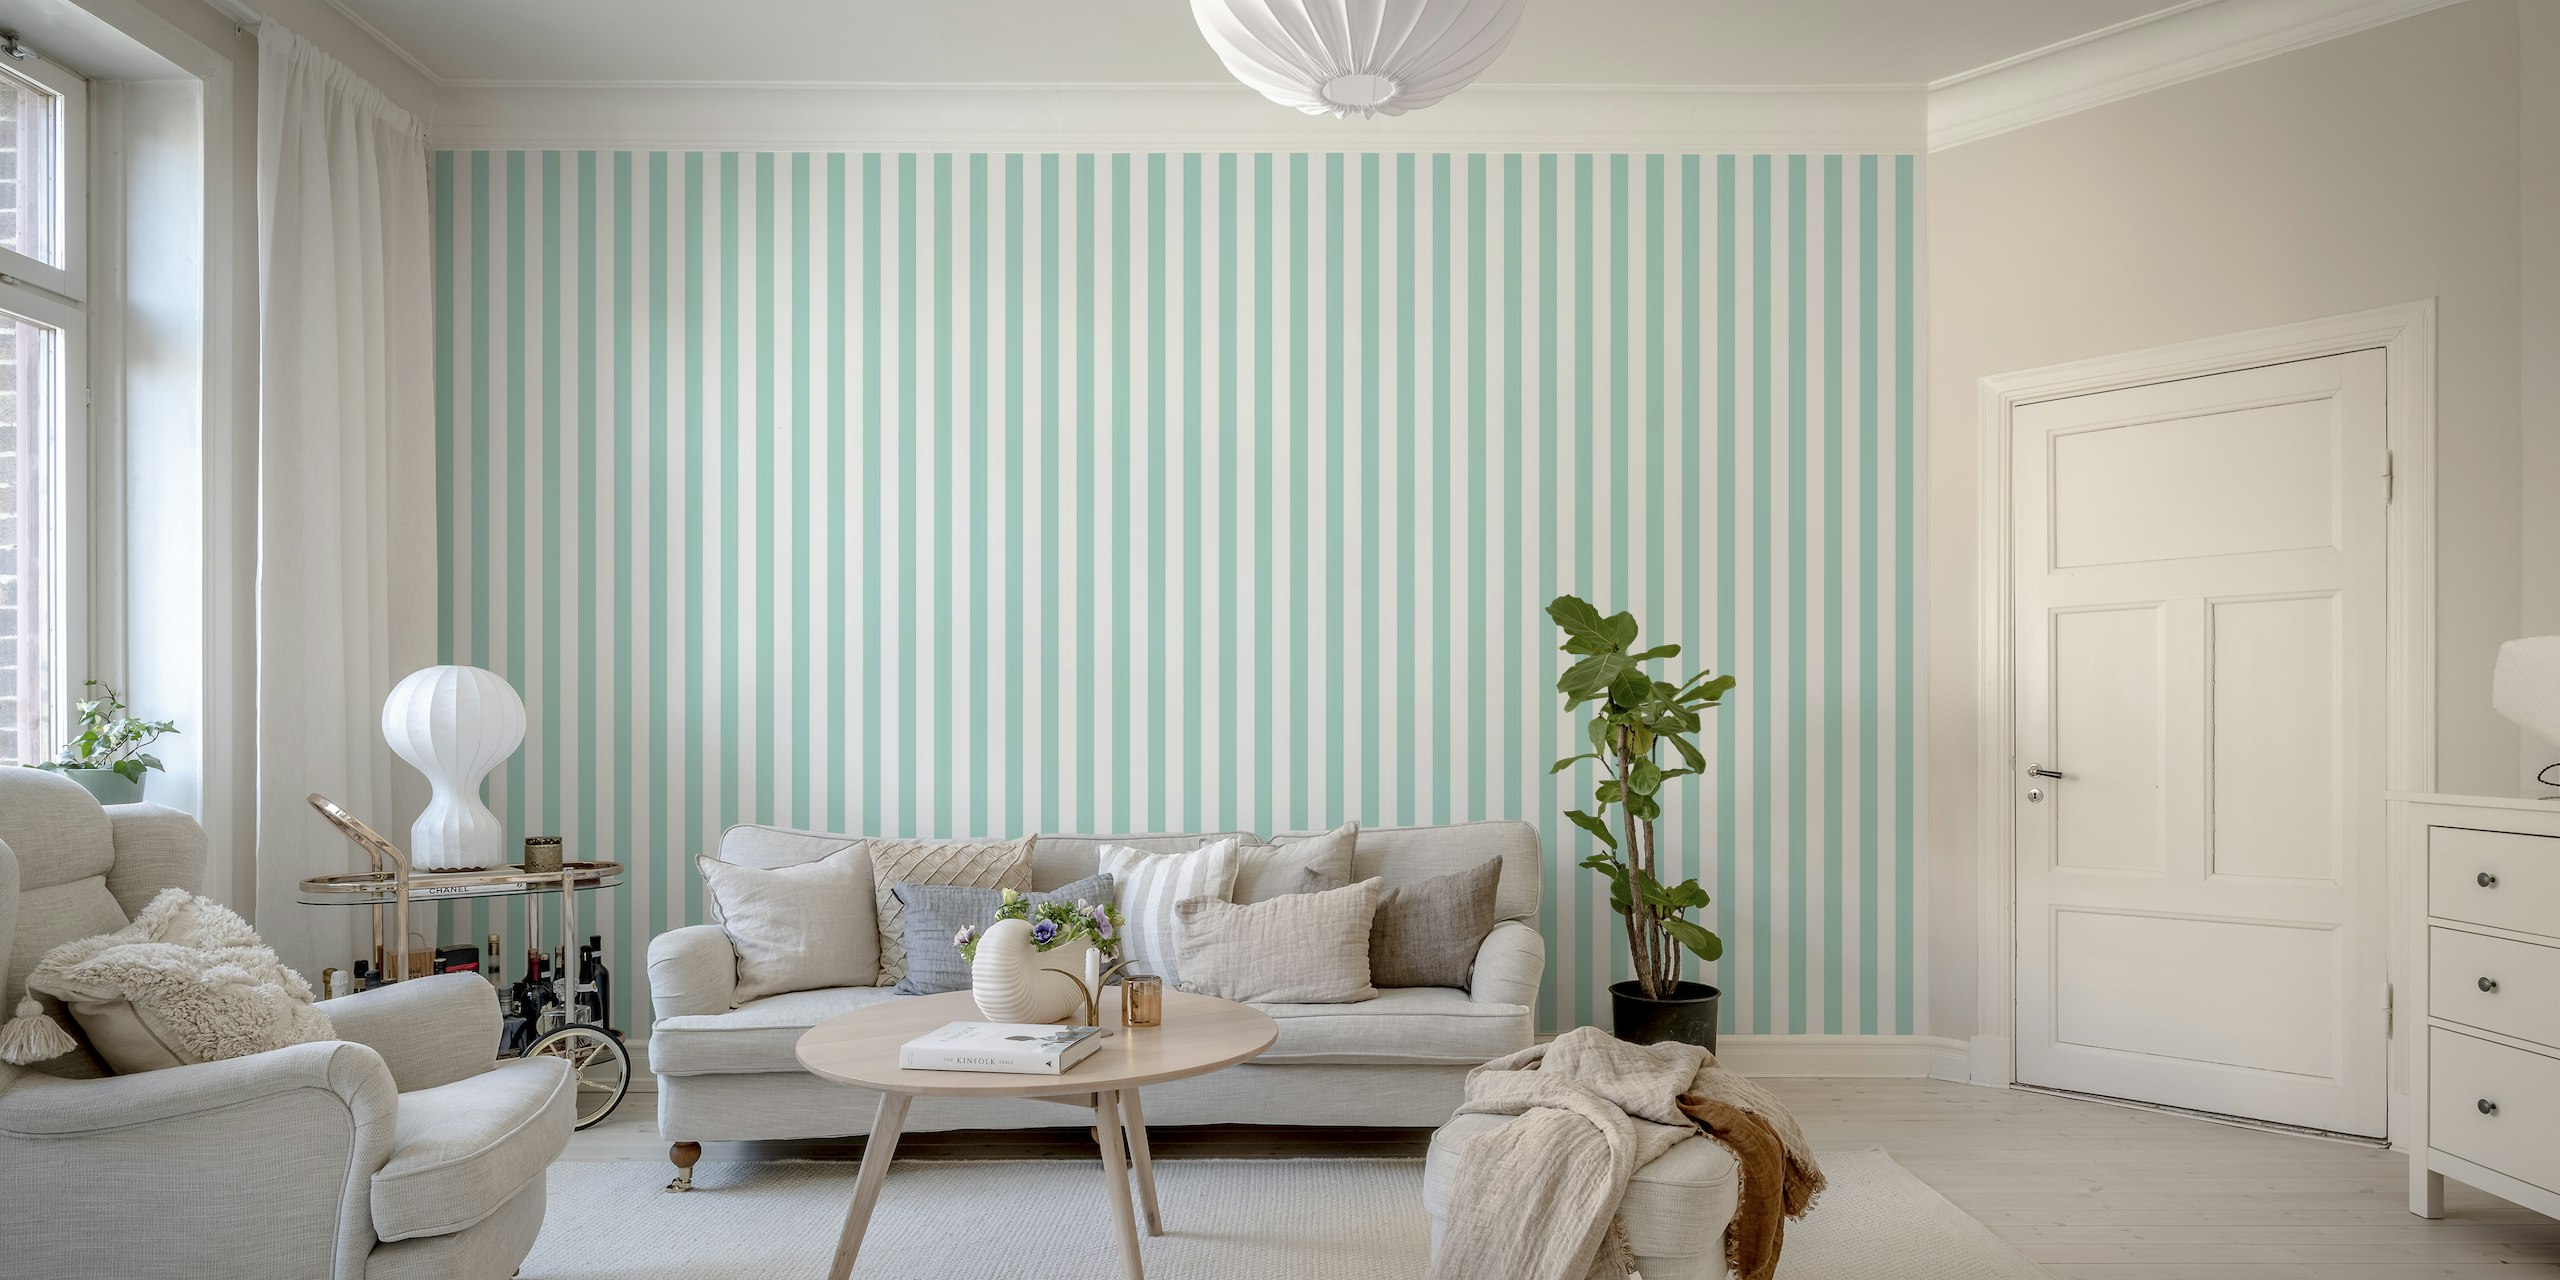 Mint and white stripes wallpaper